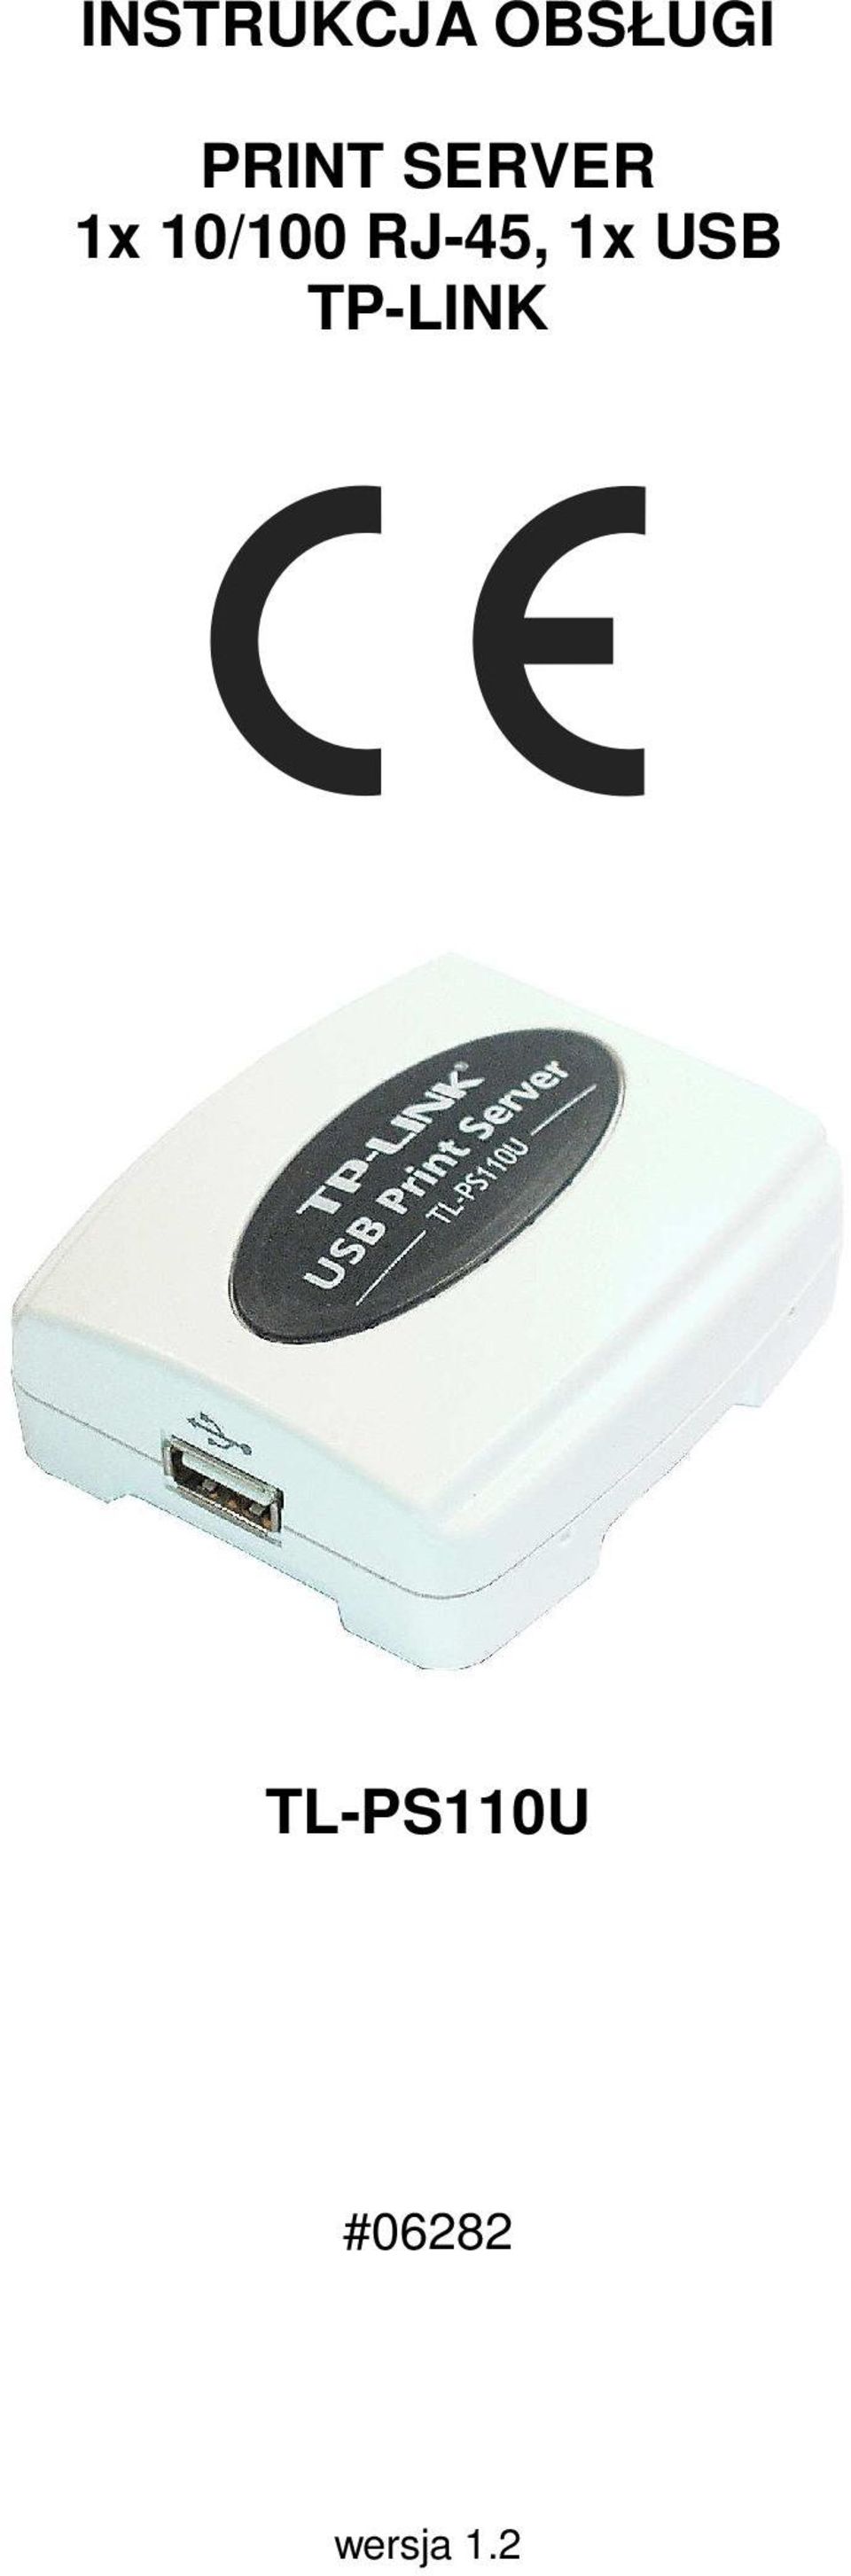 RJ-45, 1x USB TP-LINK